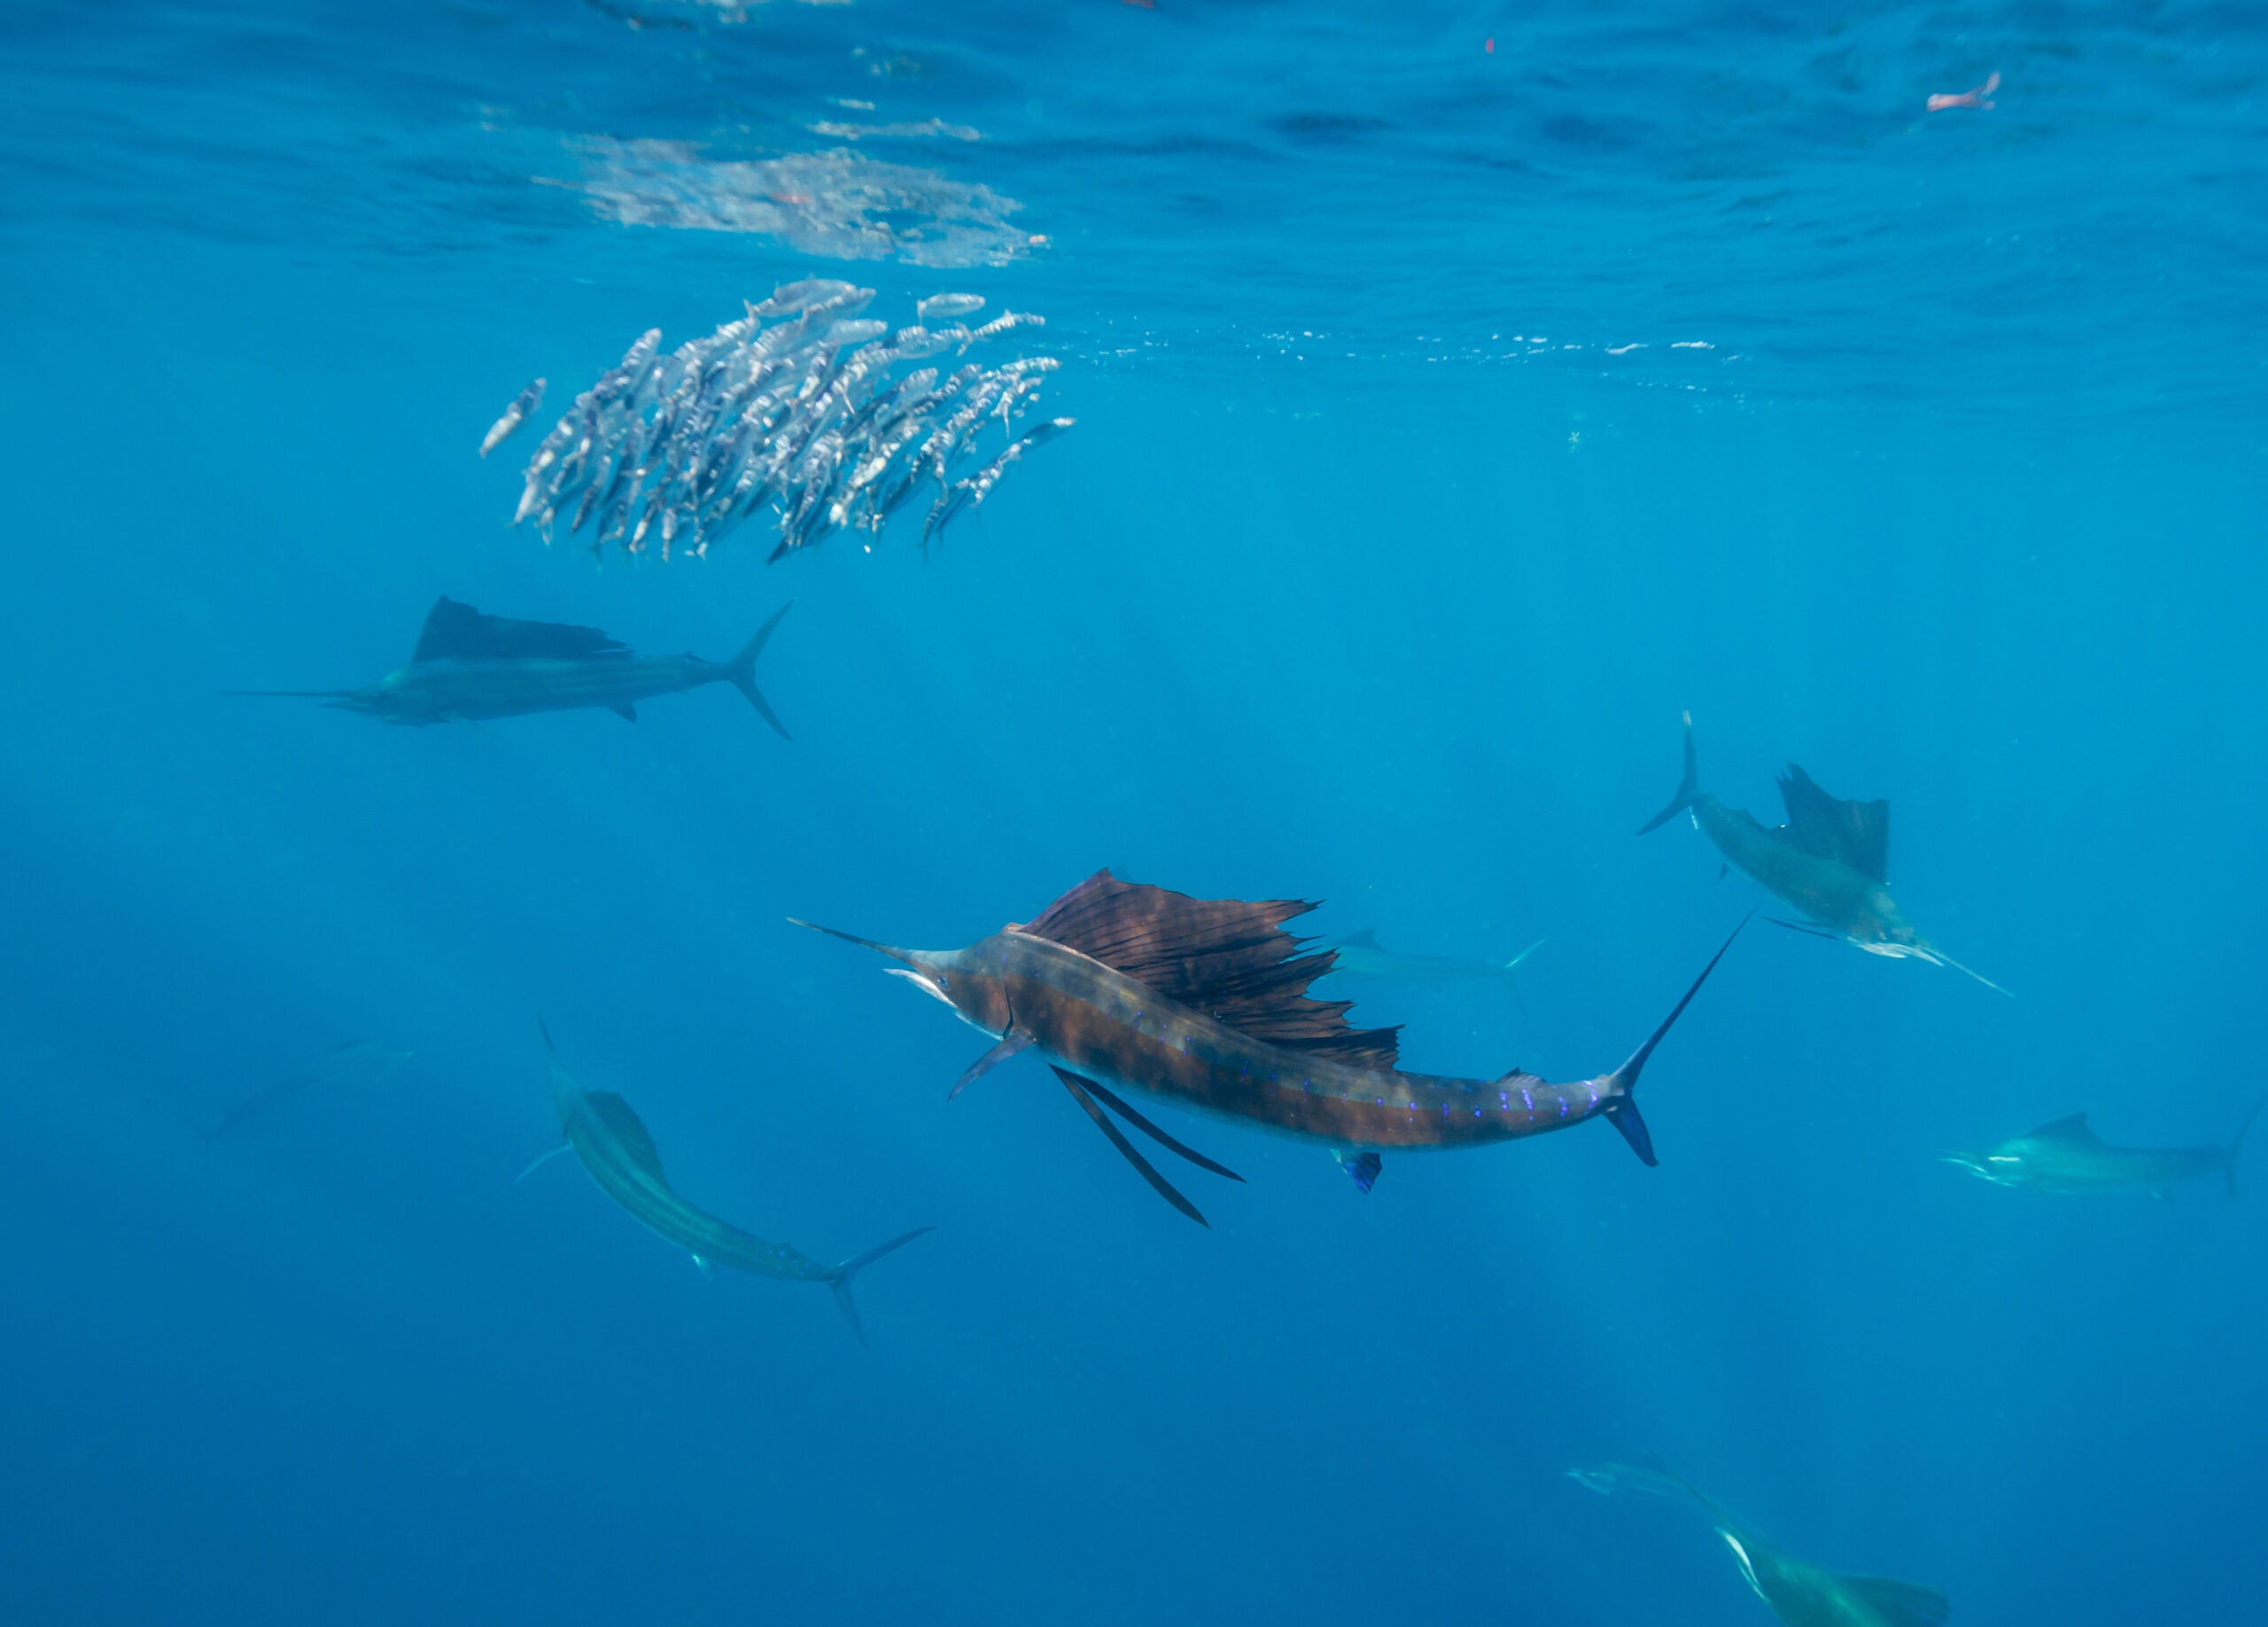 Three sailfish in blue ocean water school baitfish near the surface of the water.